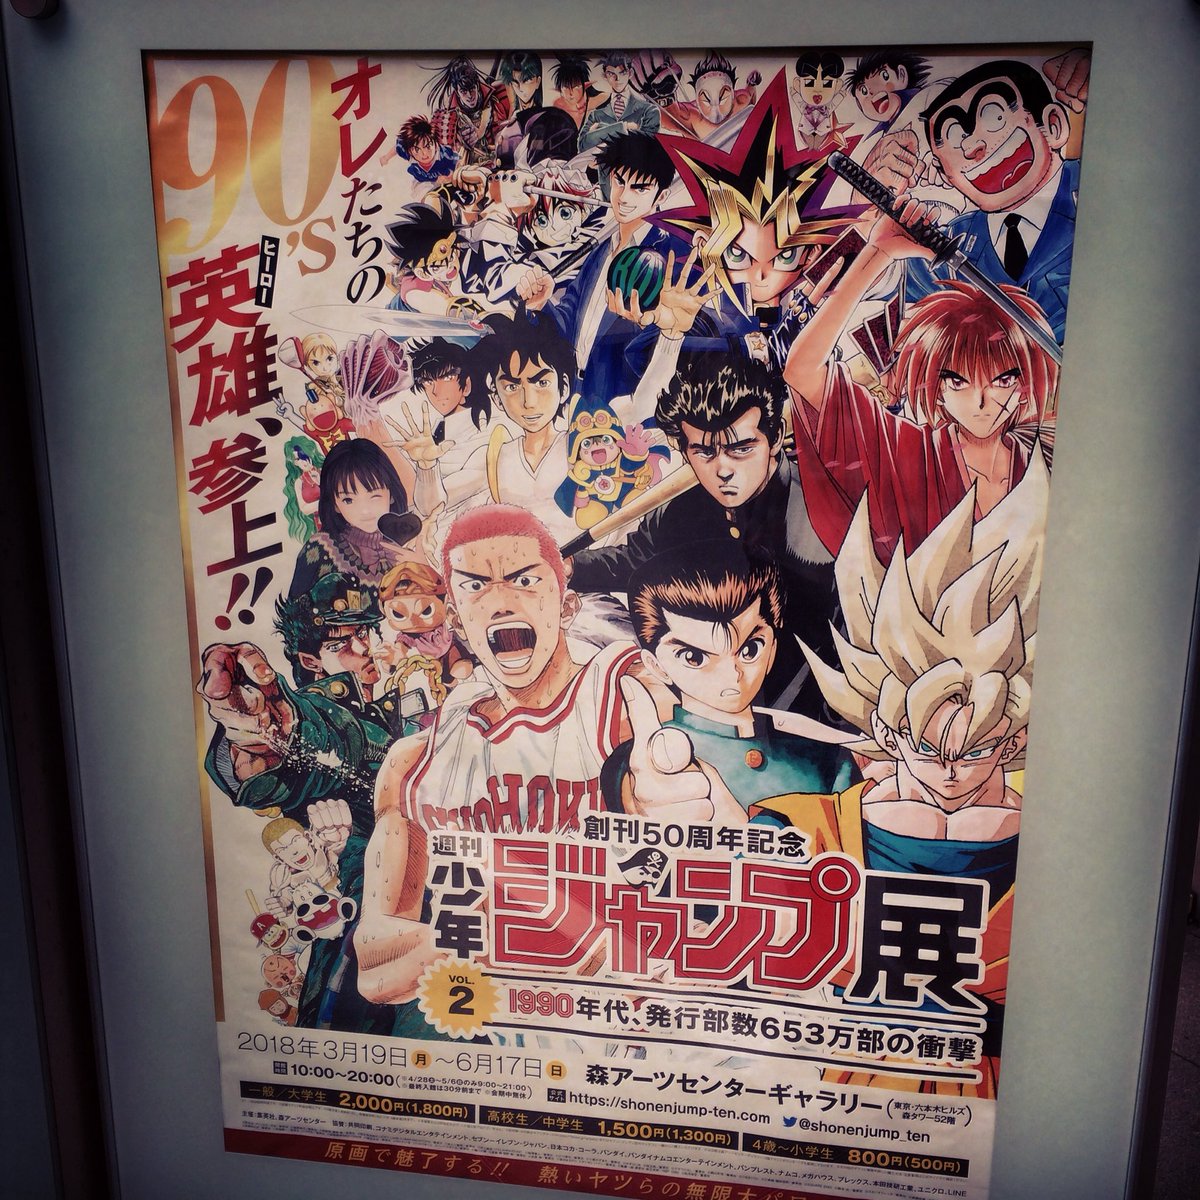 Blauereiter Saw Some Original Dragonball And Slamdunk Manga Panels At The Shonen Jump Exhibition In Roppongi Pretty Amazing 東京 少年 ジャンプ展 六本木ヒルズ森美術館 T Co Rbs98sdvg6